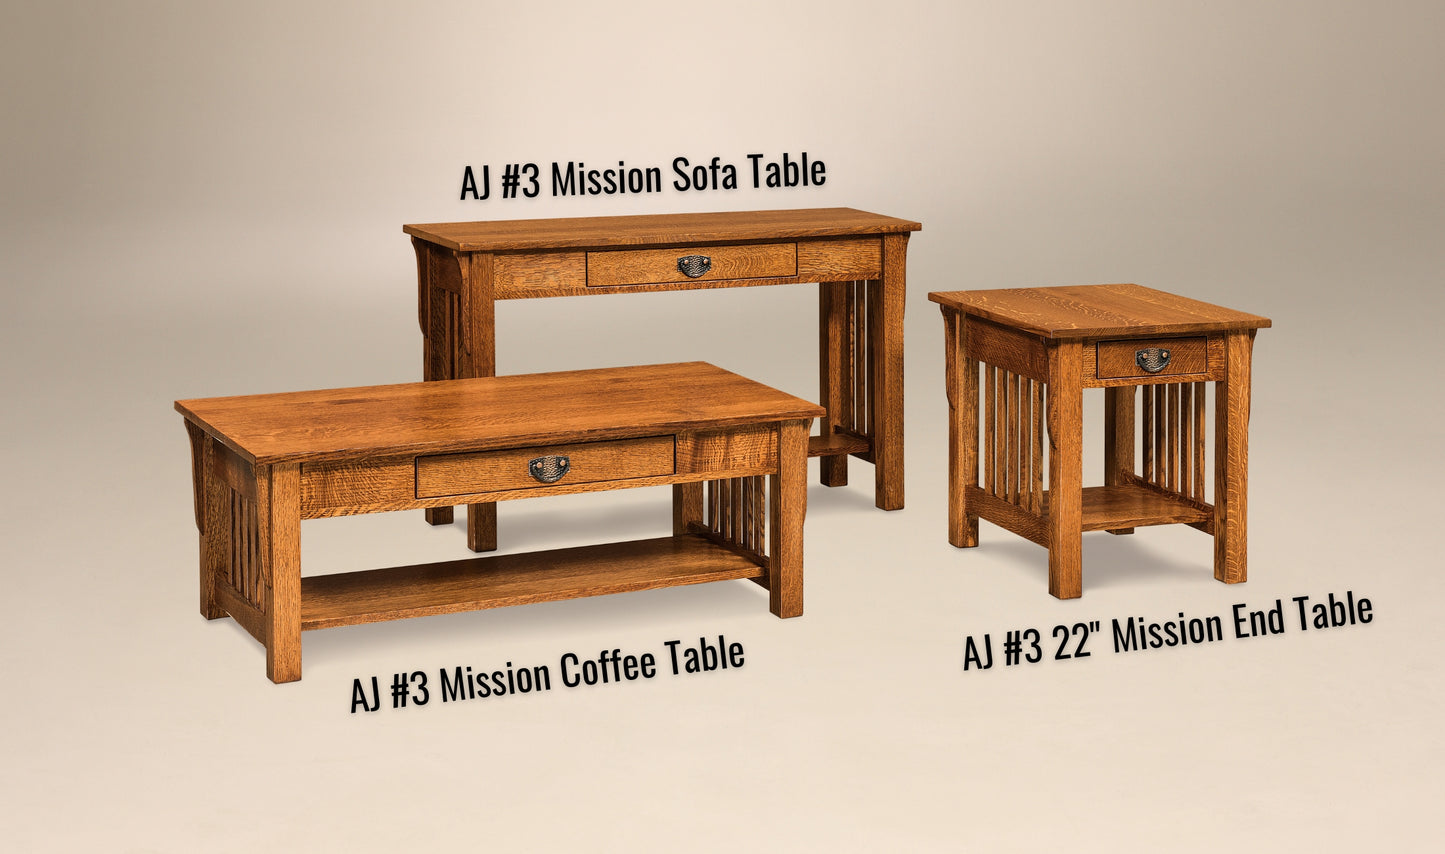 AJ #3 Mission Sofa Table